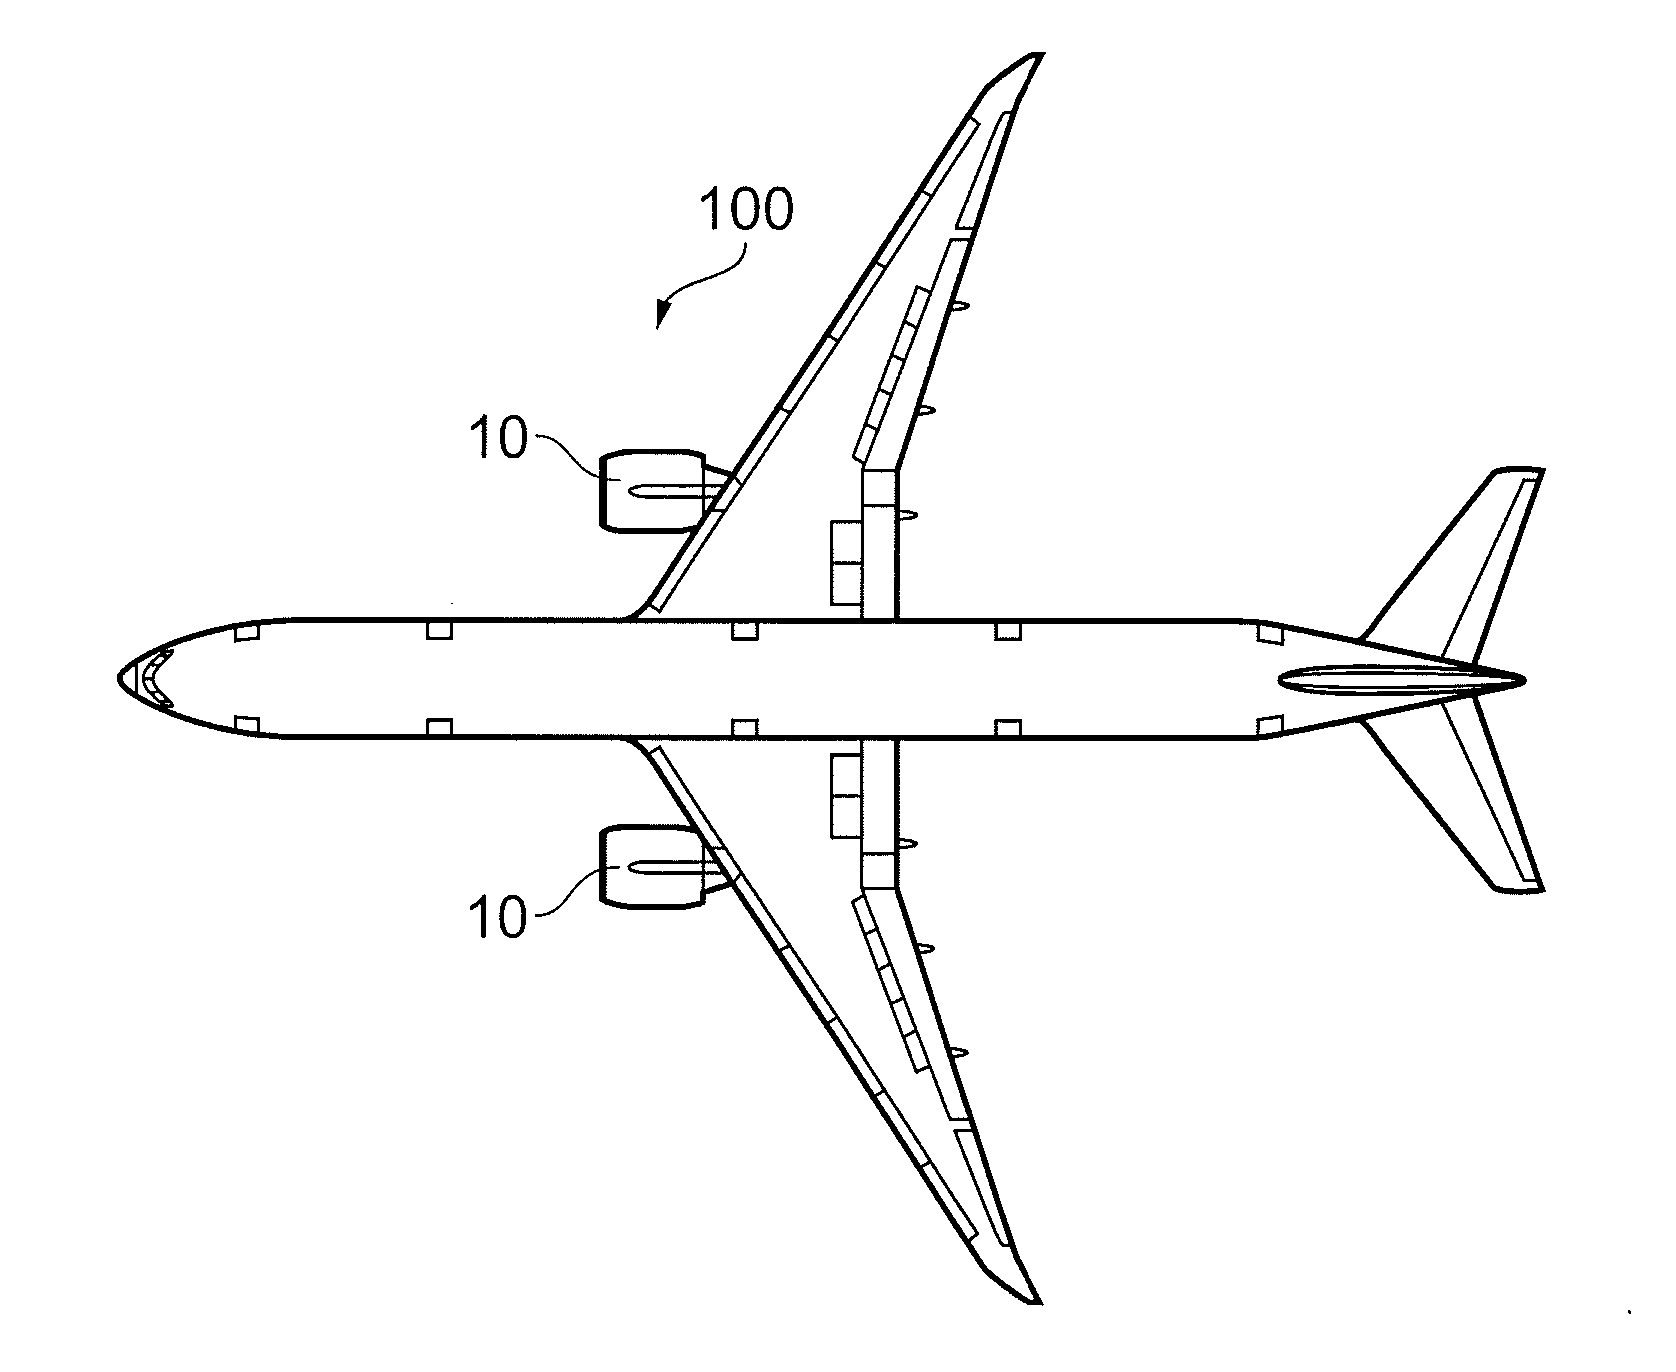 Pneumatic system for an aircraft